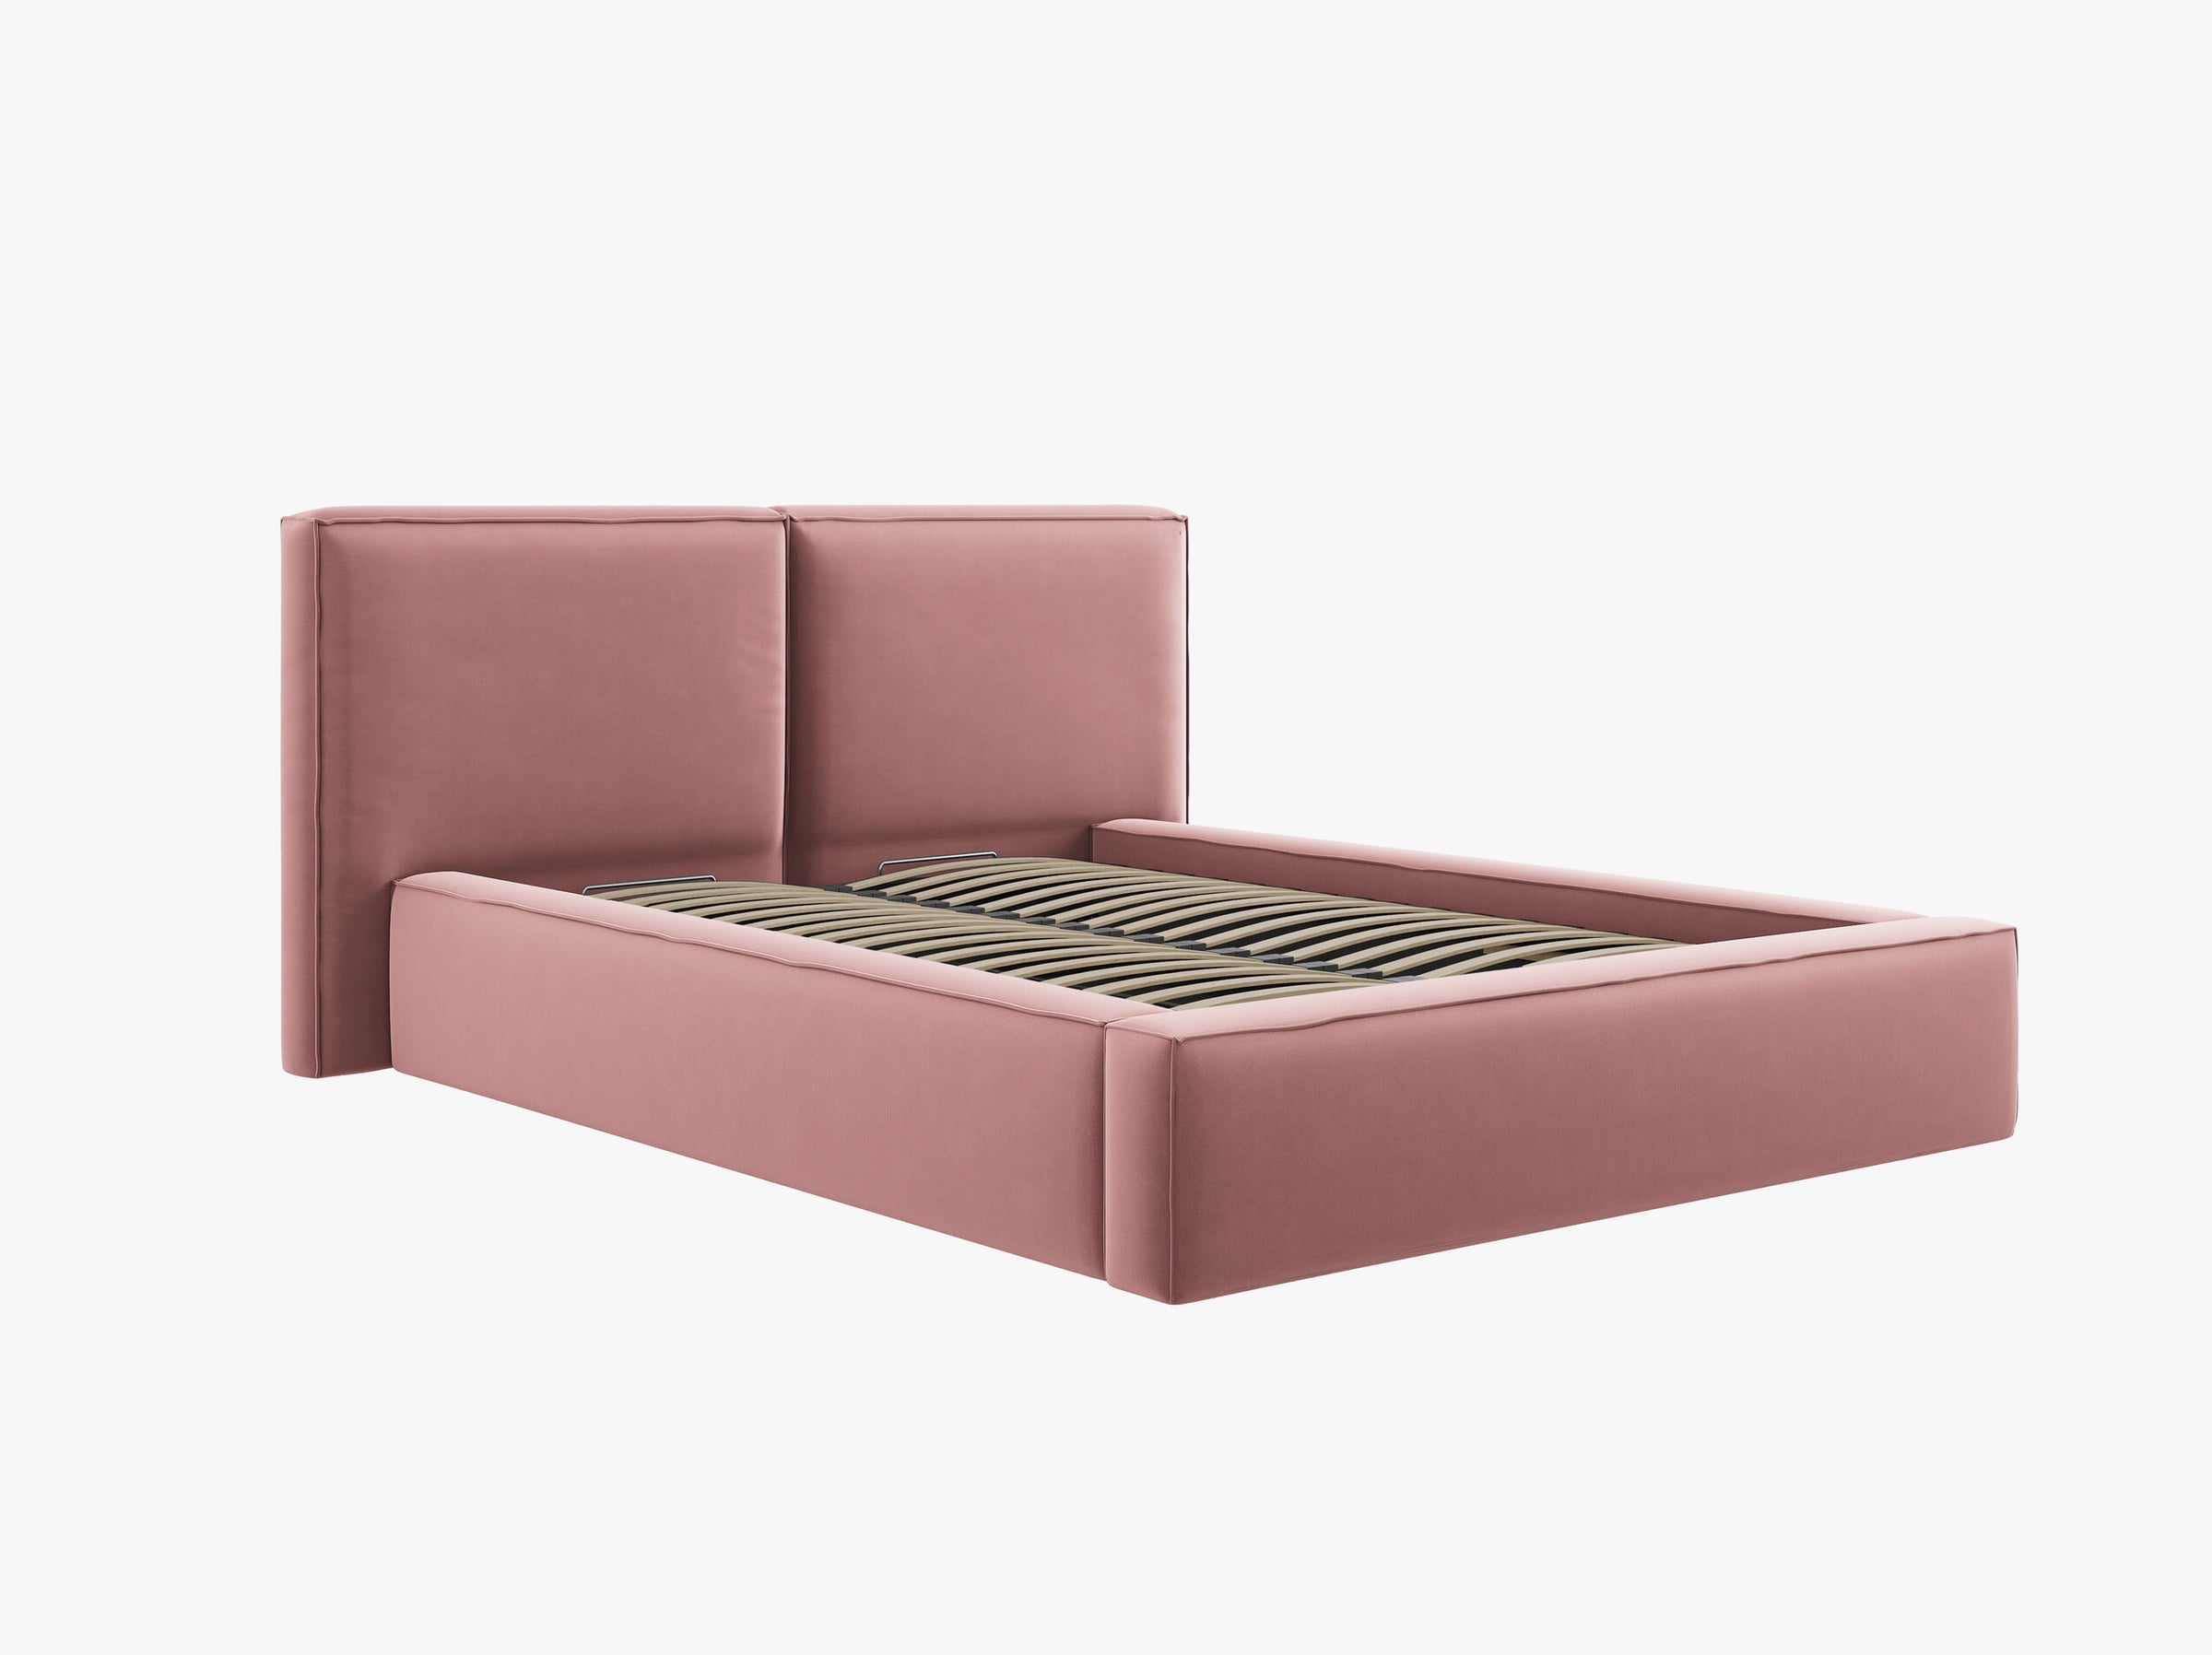 Jodie beds & mattresses velvet pink